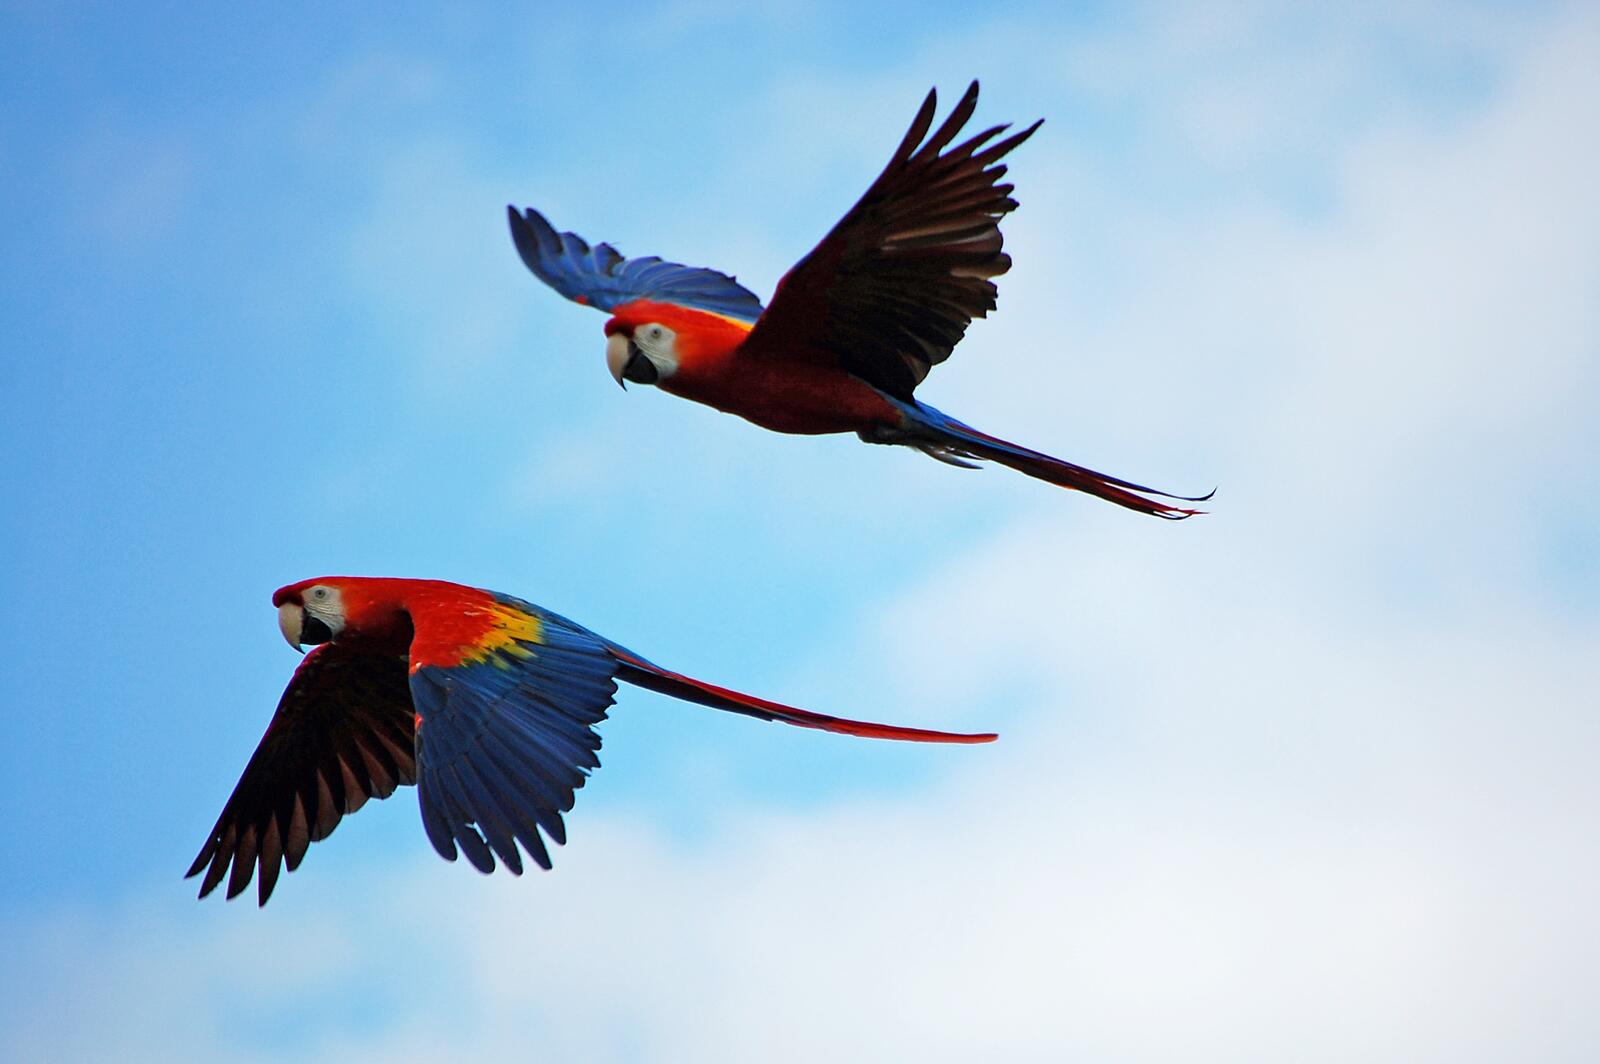 Бесплатное фото Два попугая ара на фоне неба